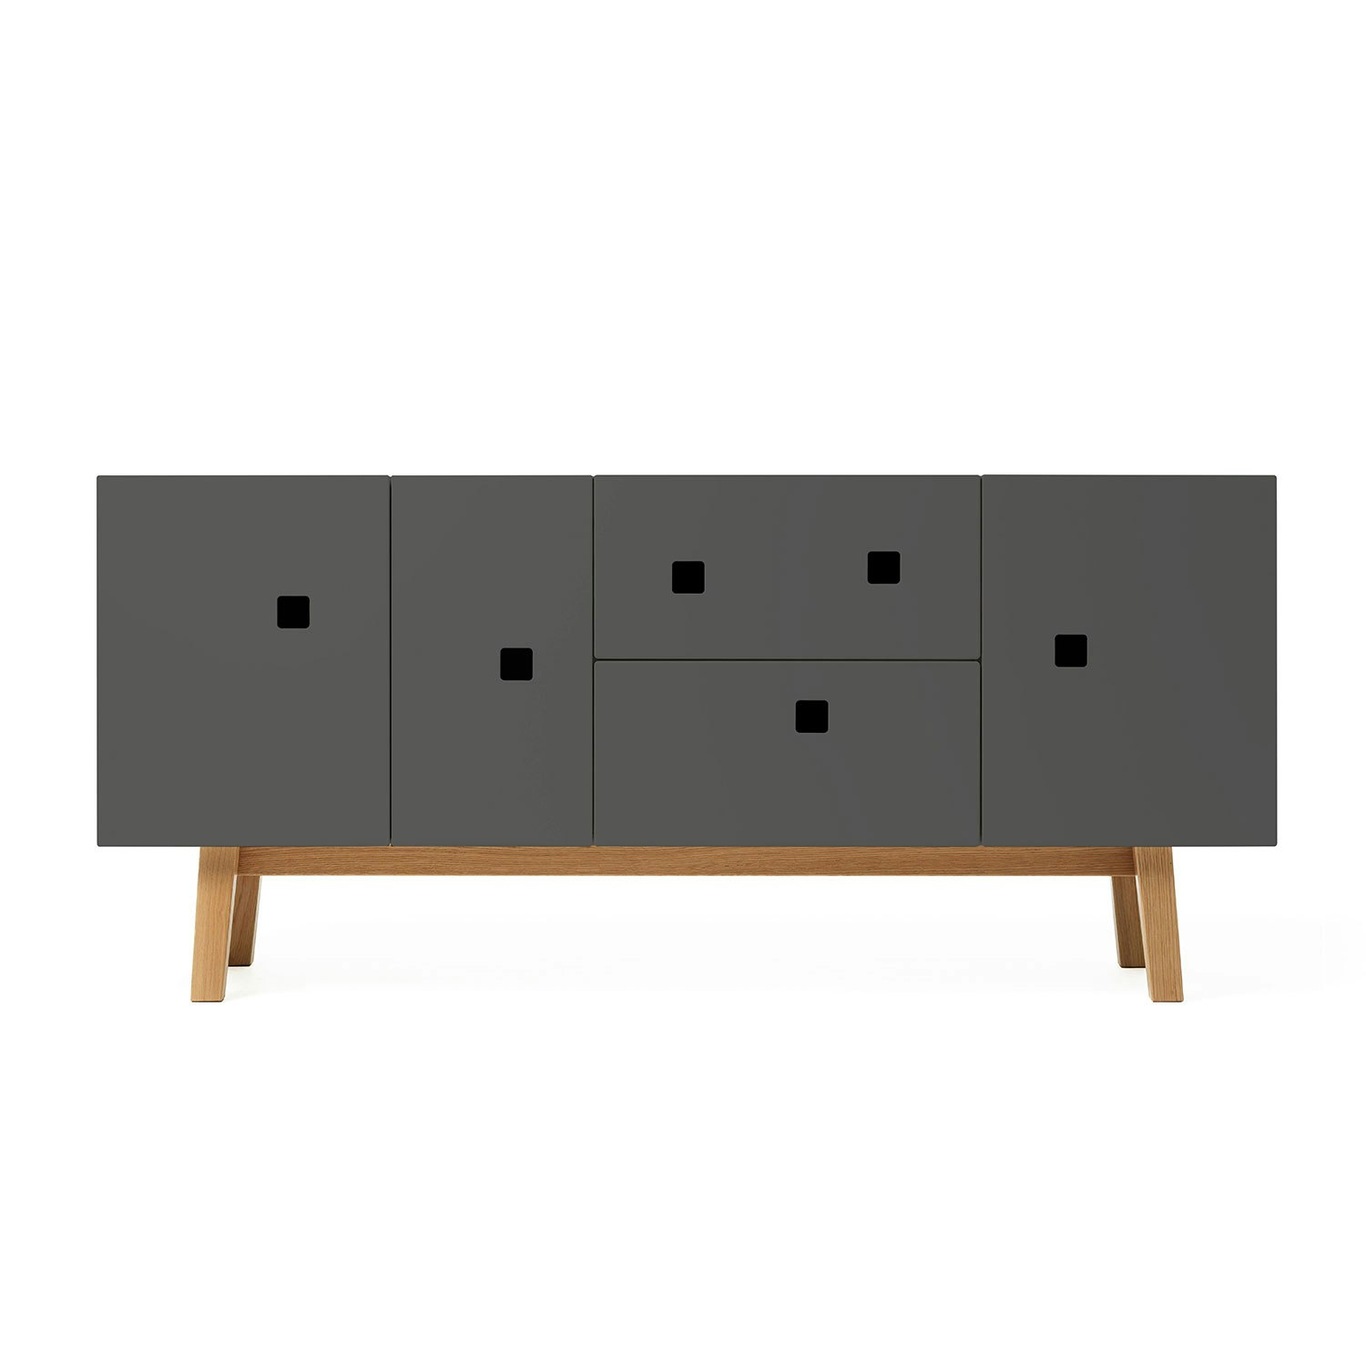 PeepM2 Media Furniture, Slate Grey/Oak